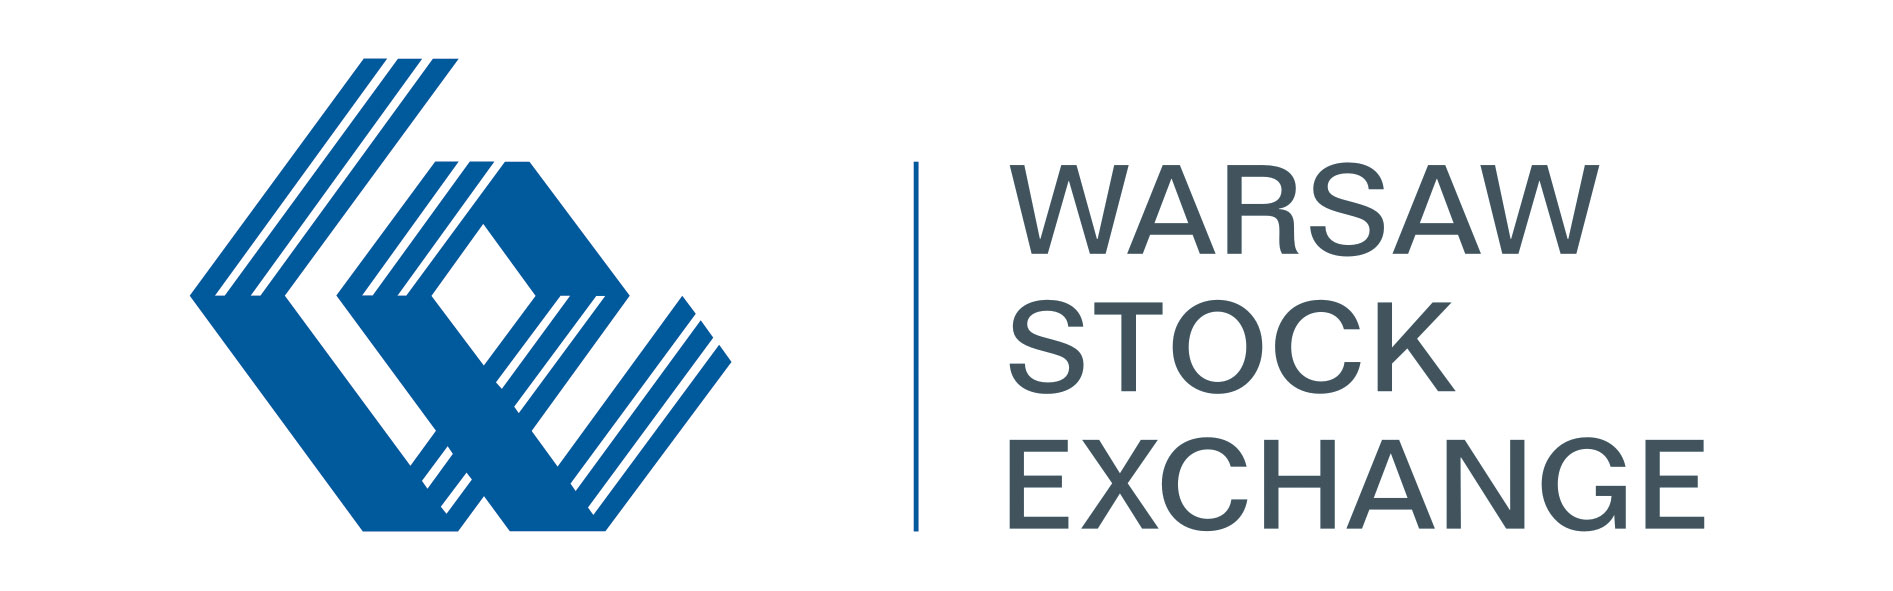 warsaw stock market